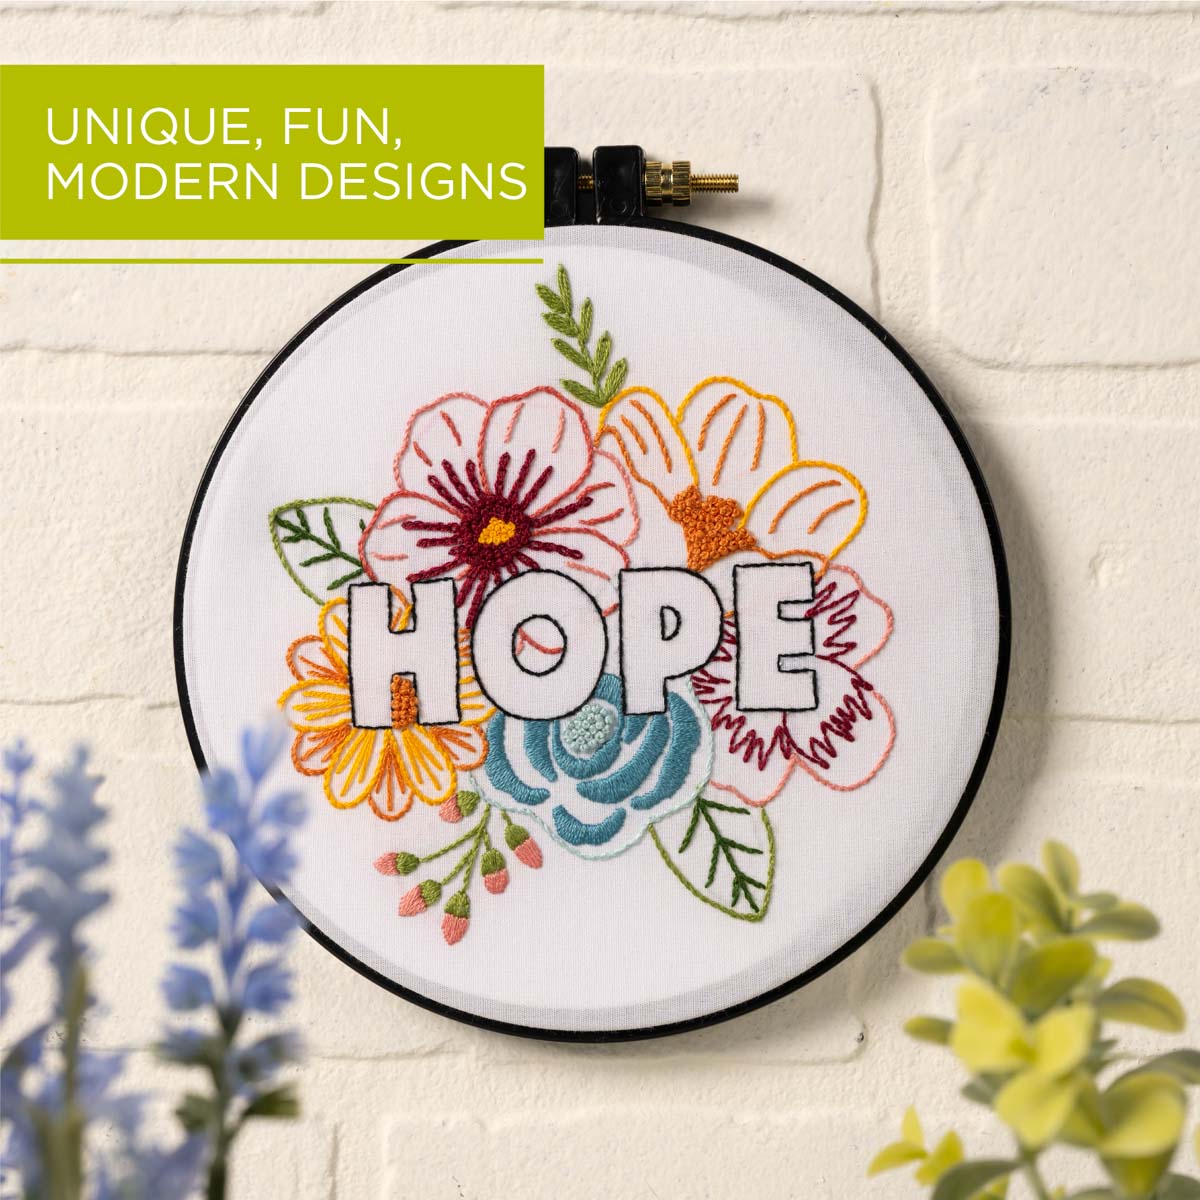 Bucilla ® Stamped Embroidery - Hope - 49456E